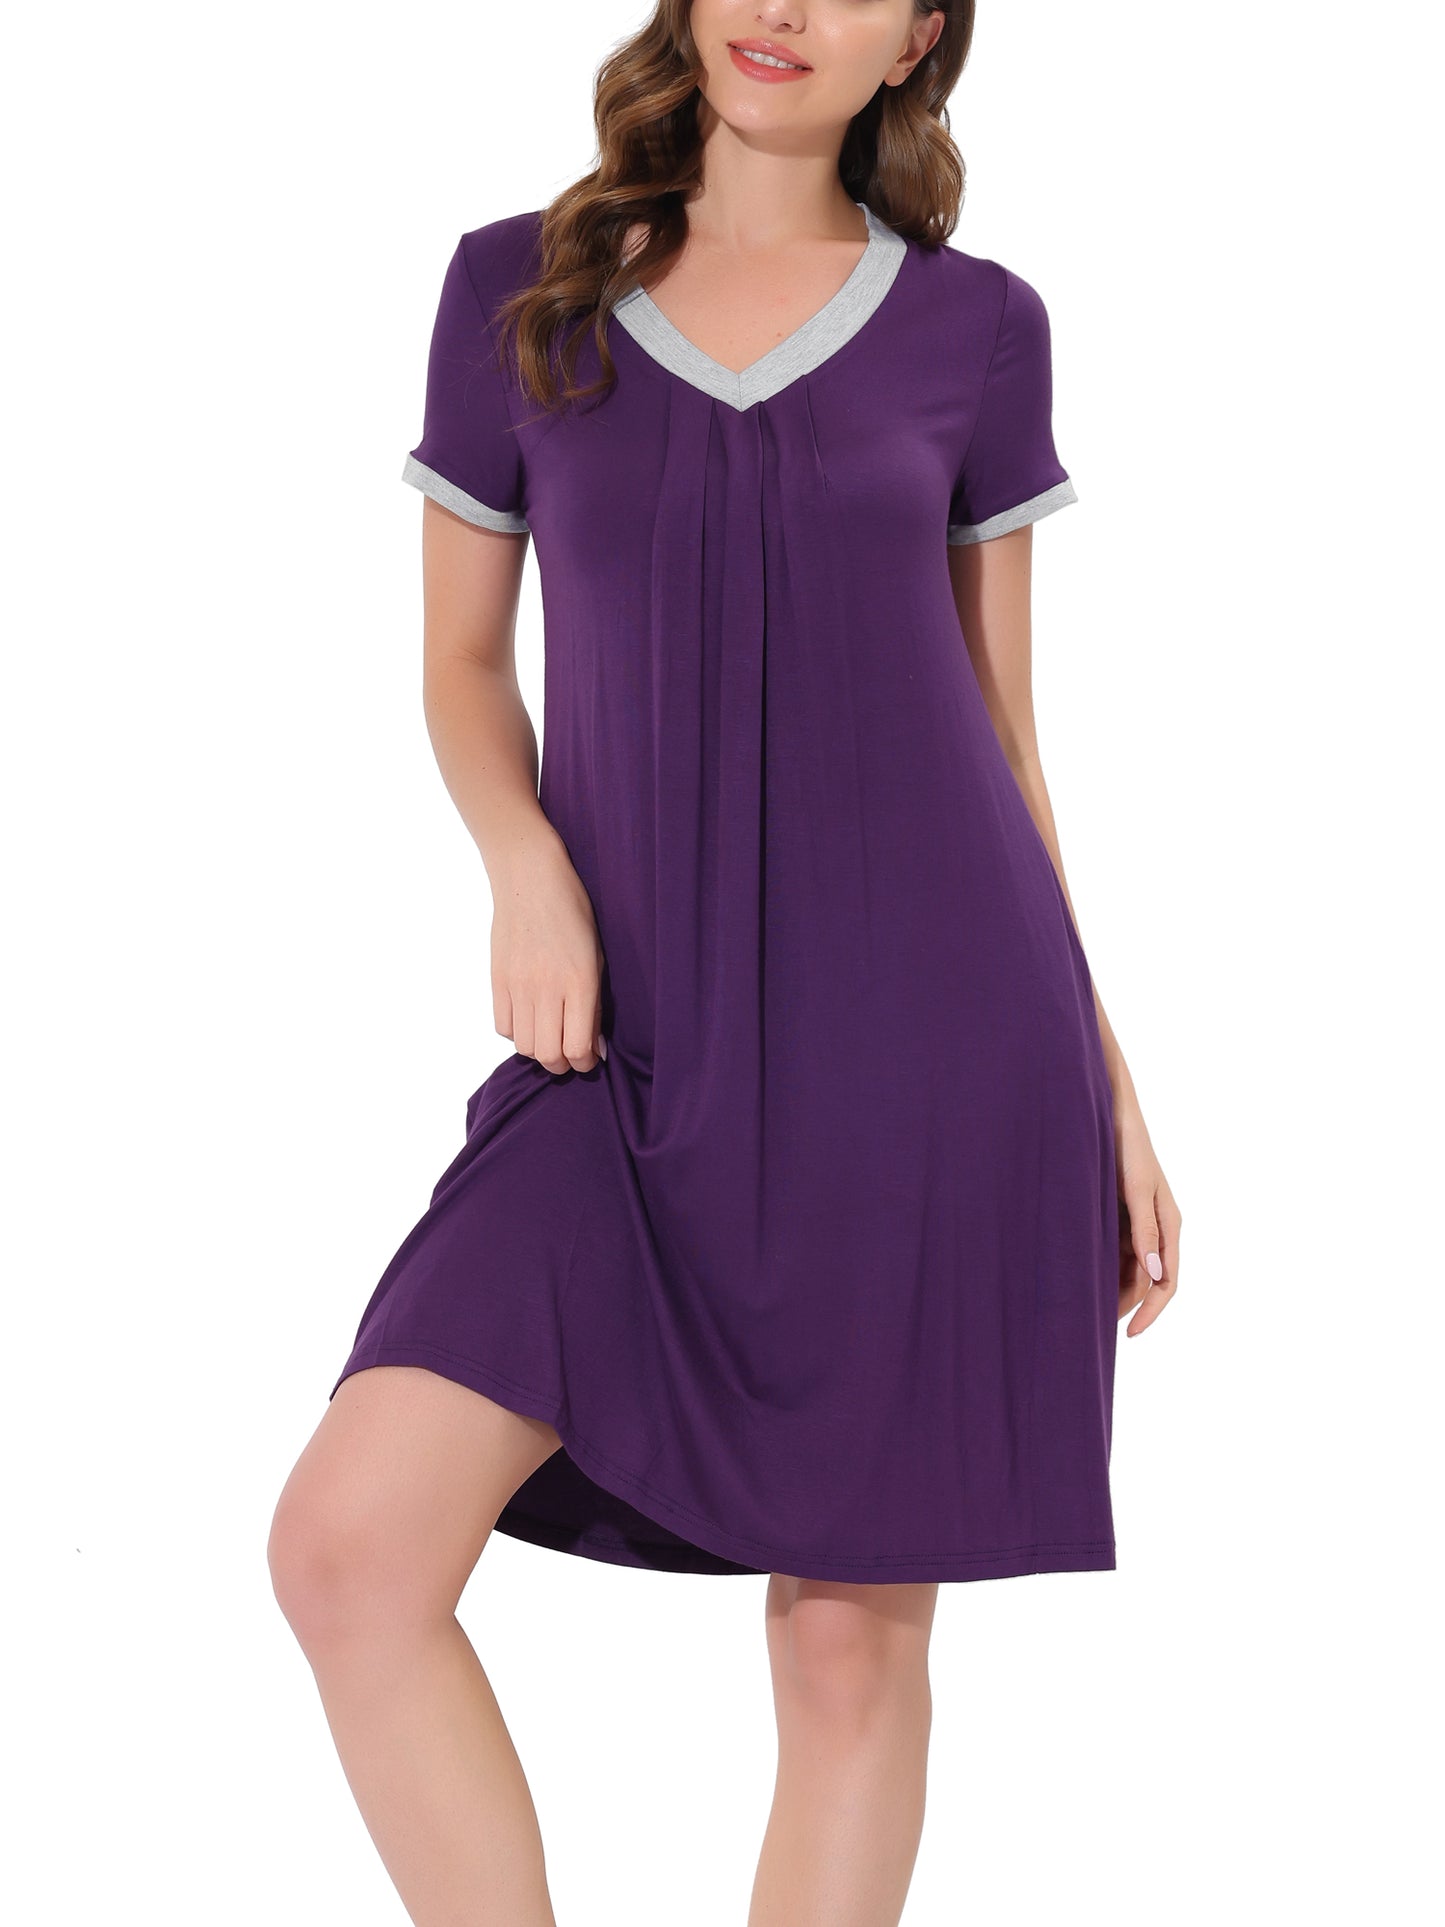 cheibear Pajama Dress Nightshirt Sleepwear V-Neck with Pockets Lounge Nightgown Purple